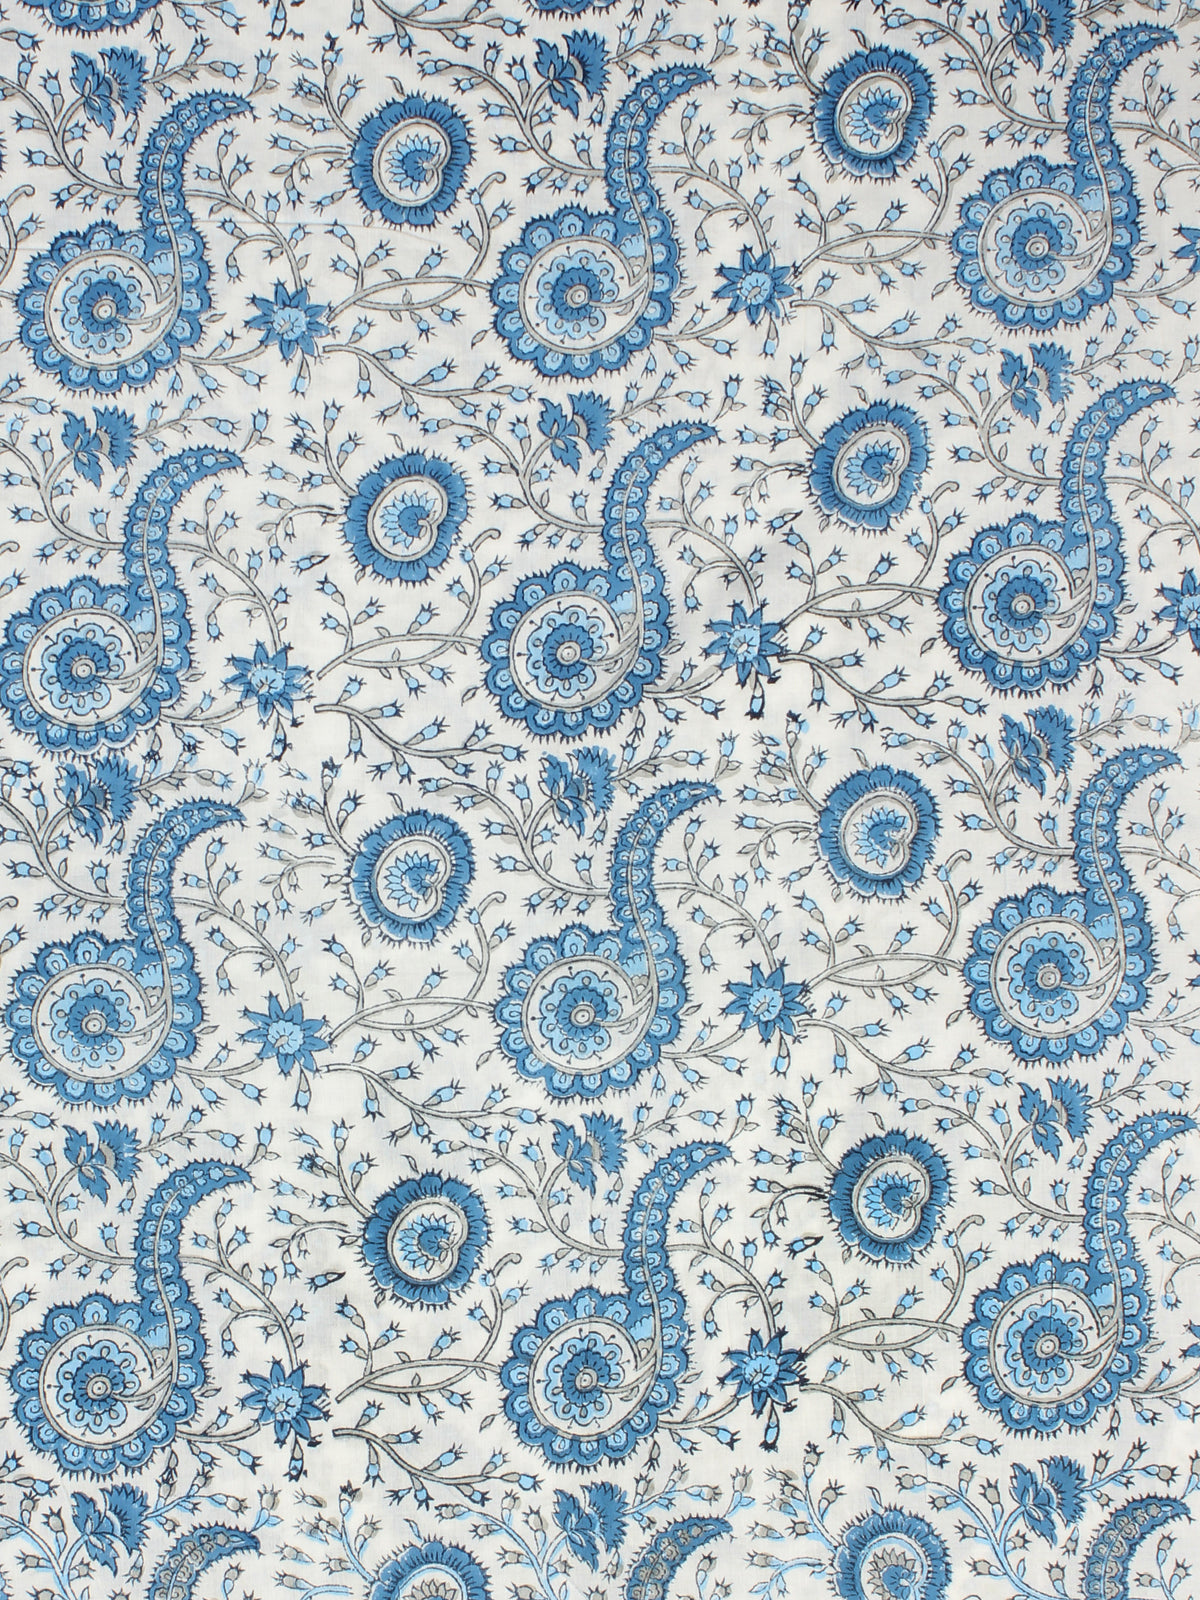 White Blue Hand Block Printed Cotton Fabric Per Meter - F001F2323